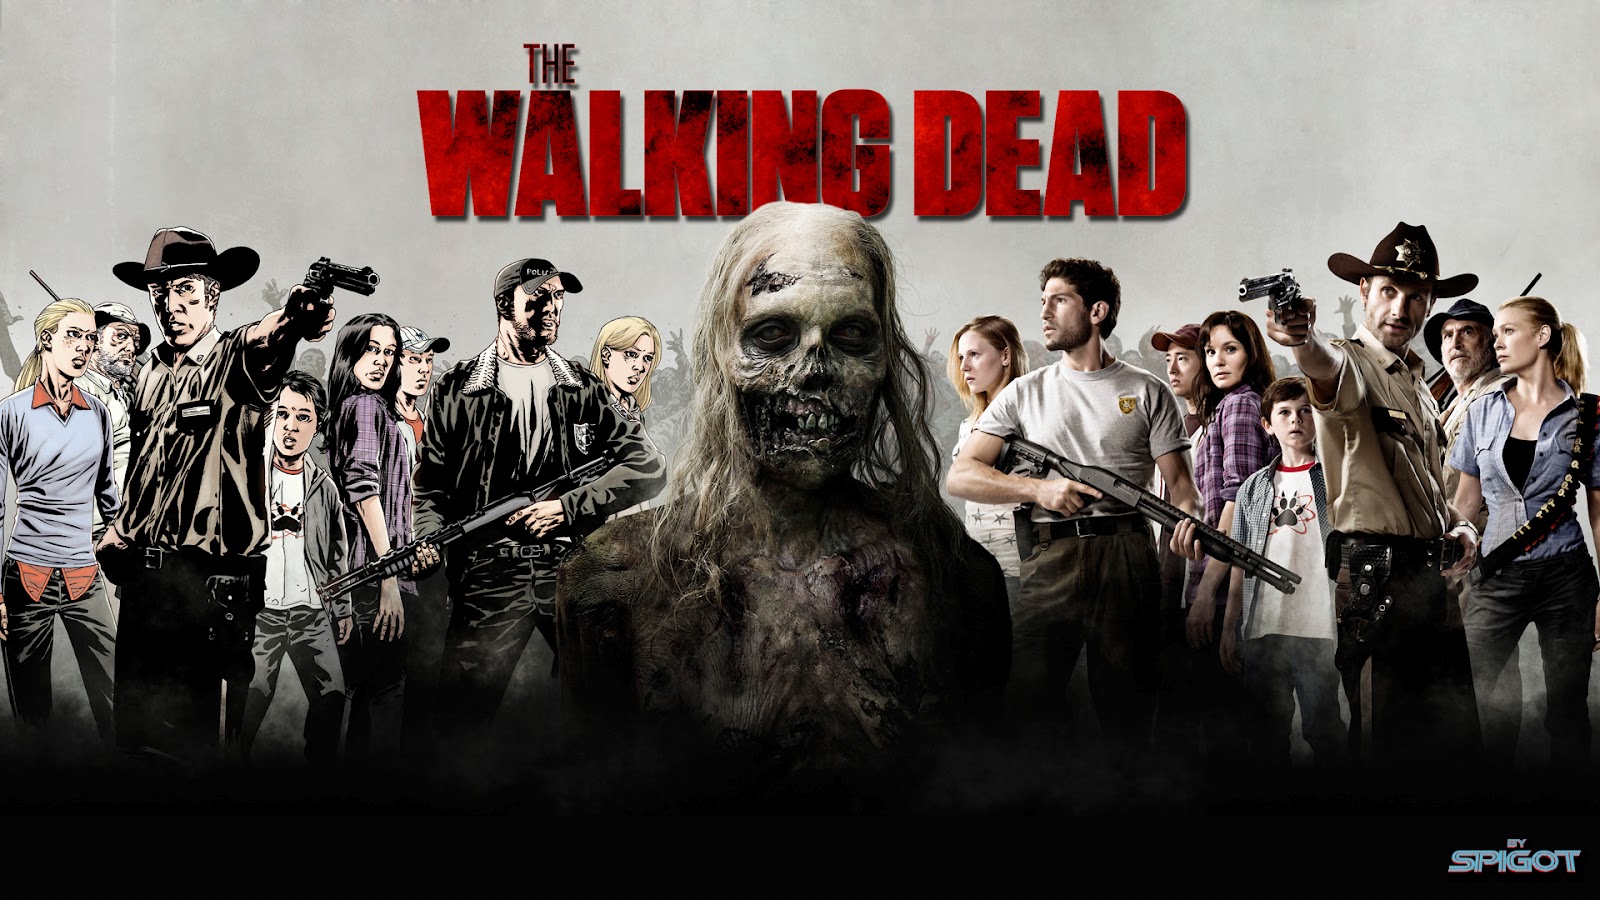 The Walking Dead Wallpaper HD Imagebank Biz